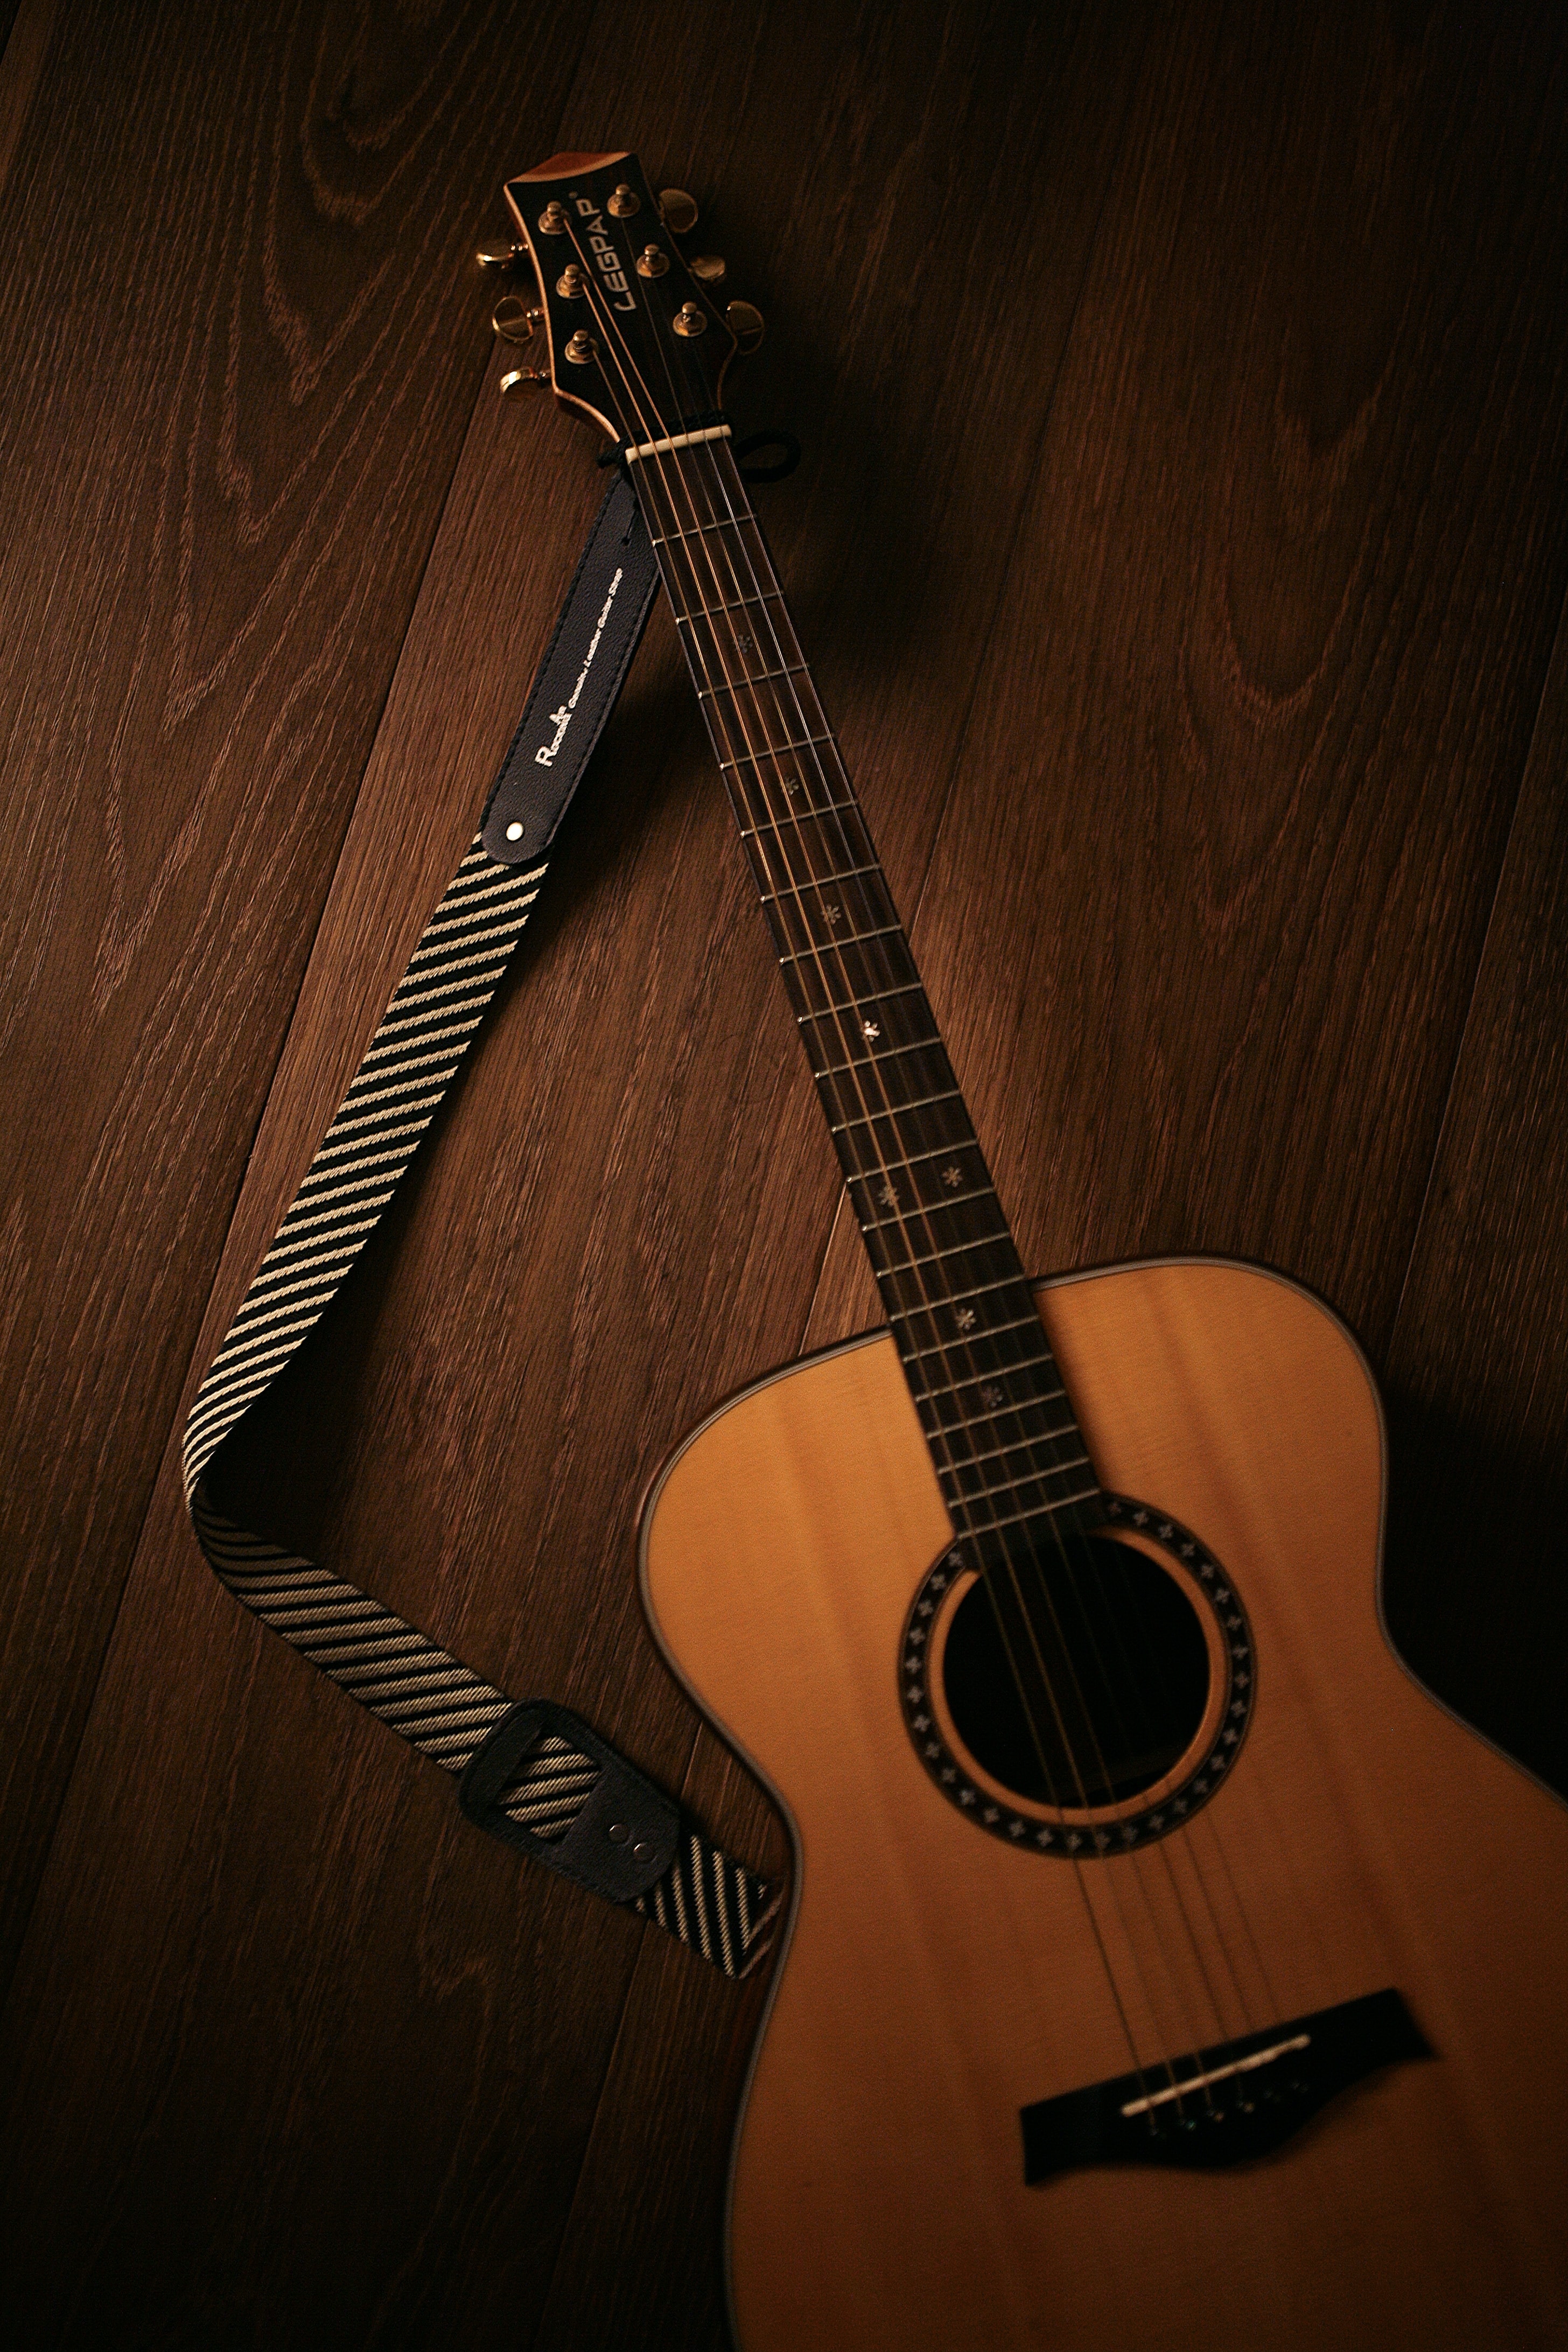 guitar, acoustic guitar, music, brown, musical instrument, wood, wooden